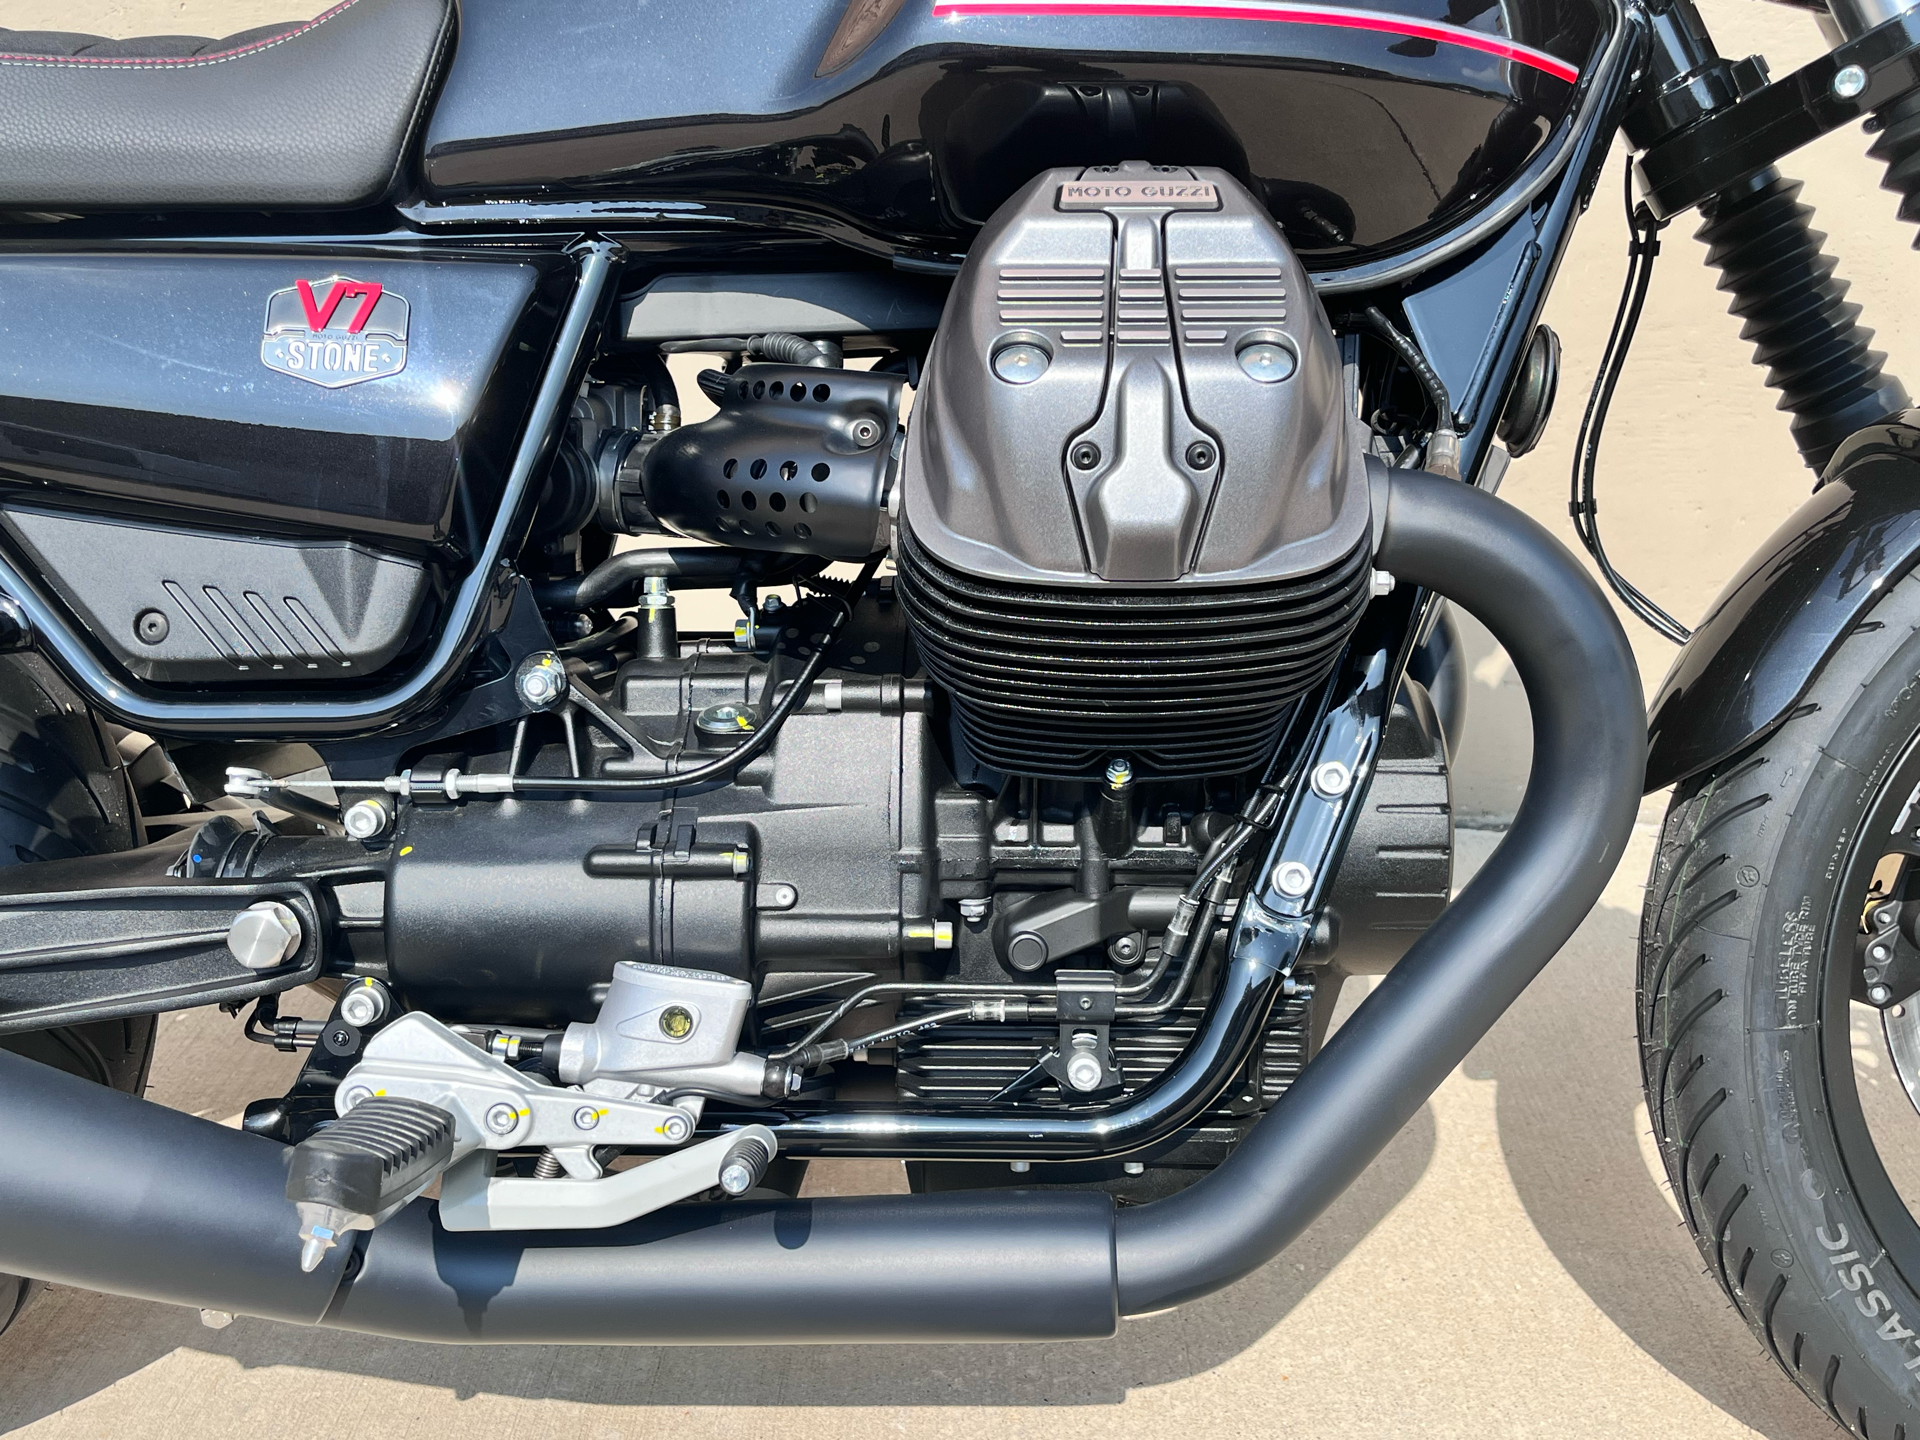 2023 Moto Guzzi V7 Stone Special Edition in Roselle, Illinois - Photo 7